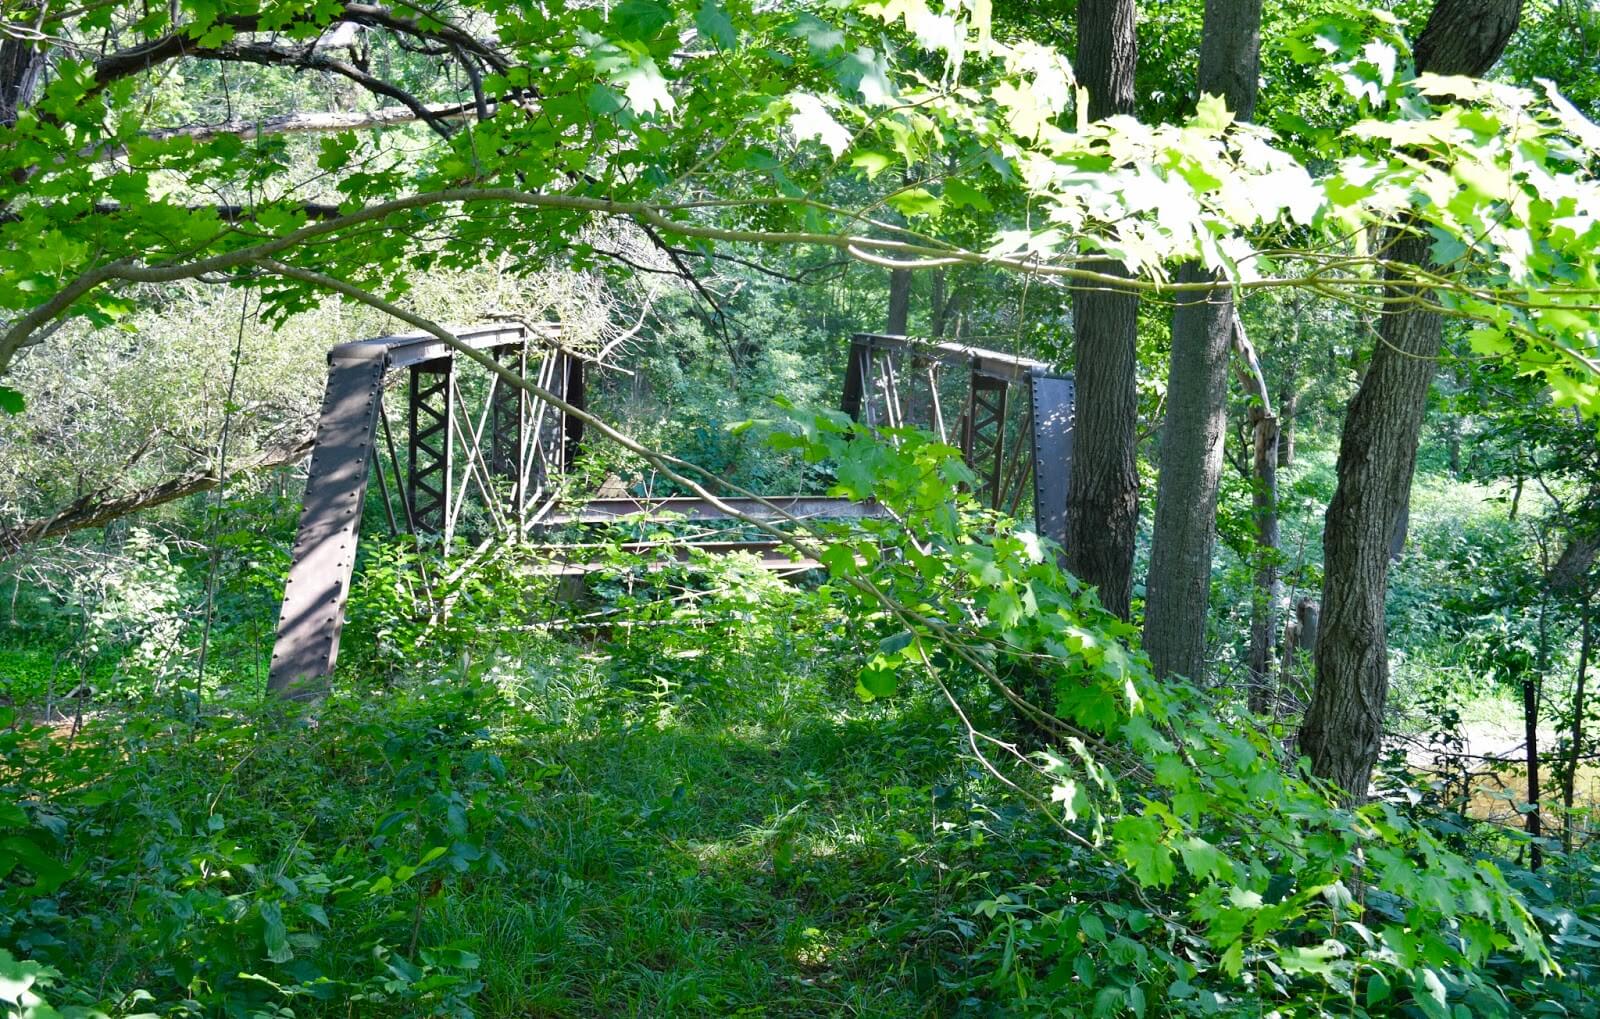 Neglected truss bridge in Sebringville with trees surrounding